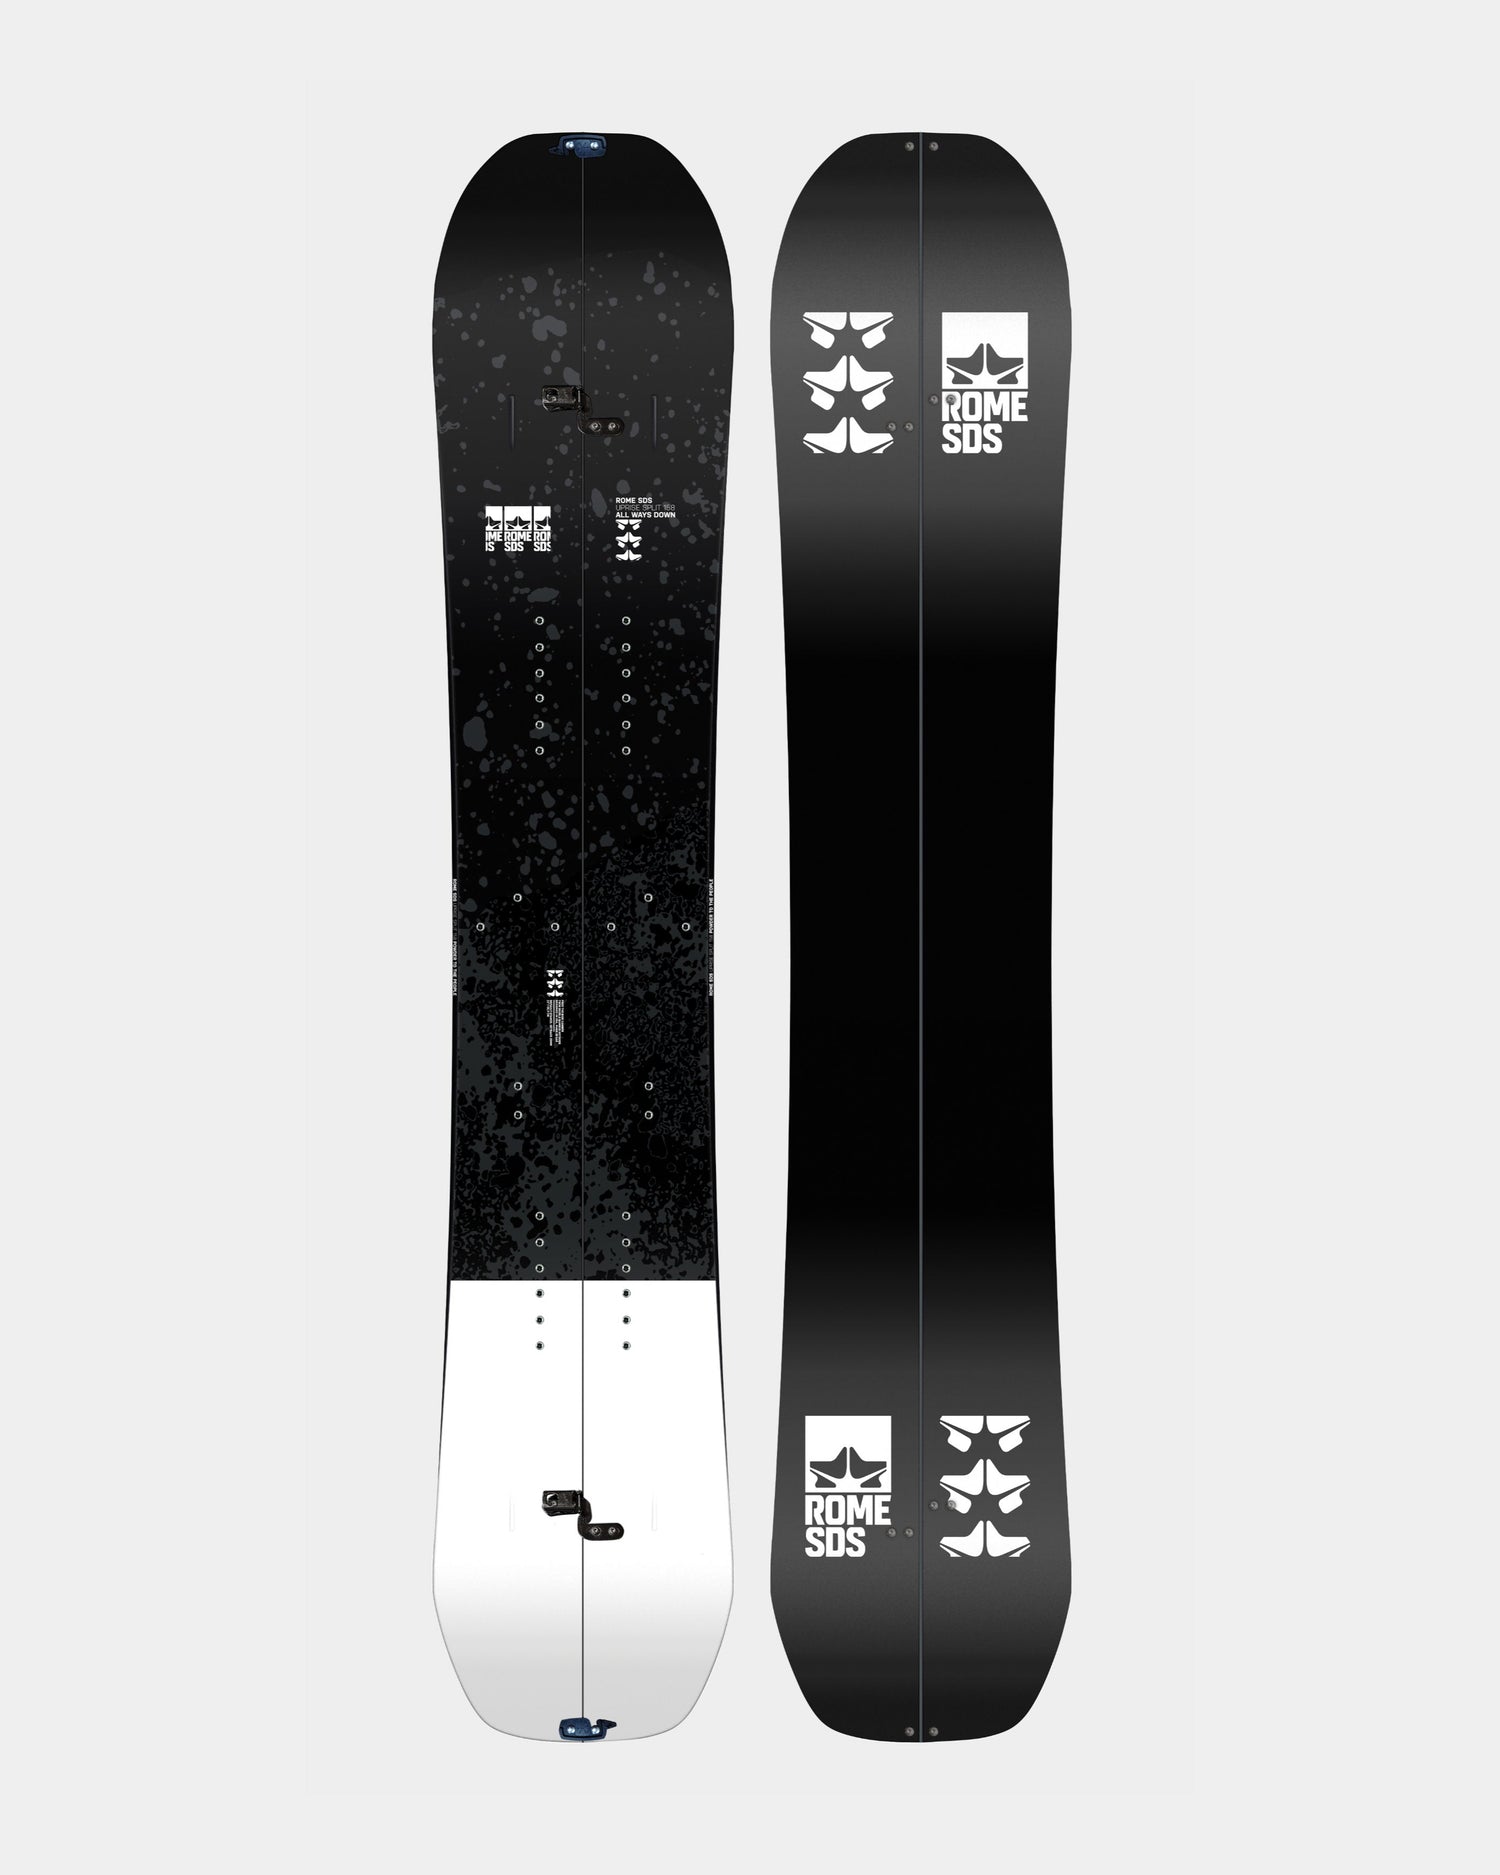 Snowboards